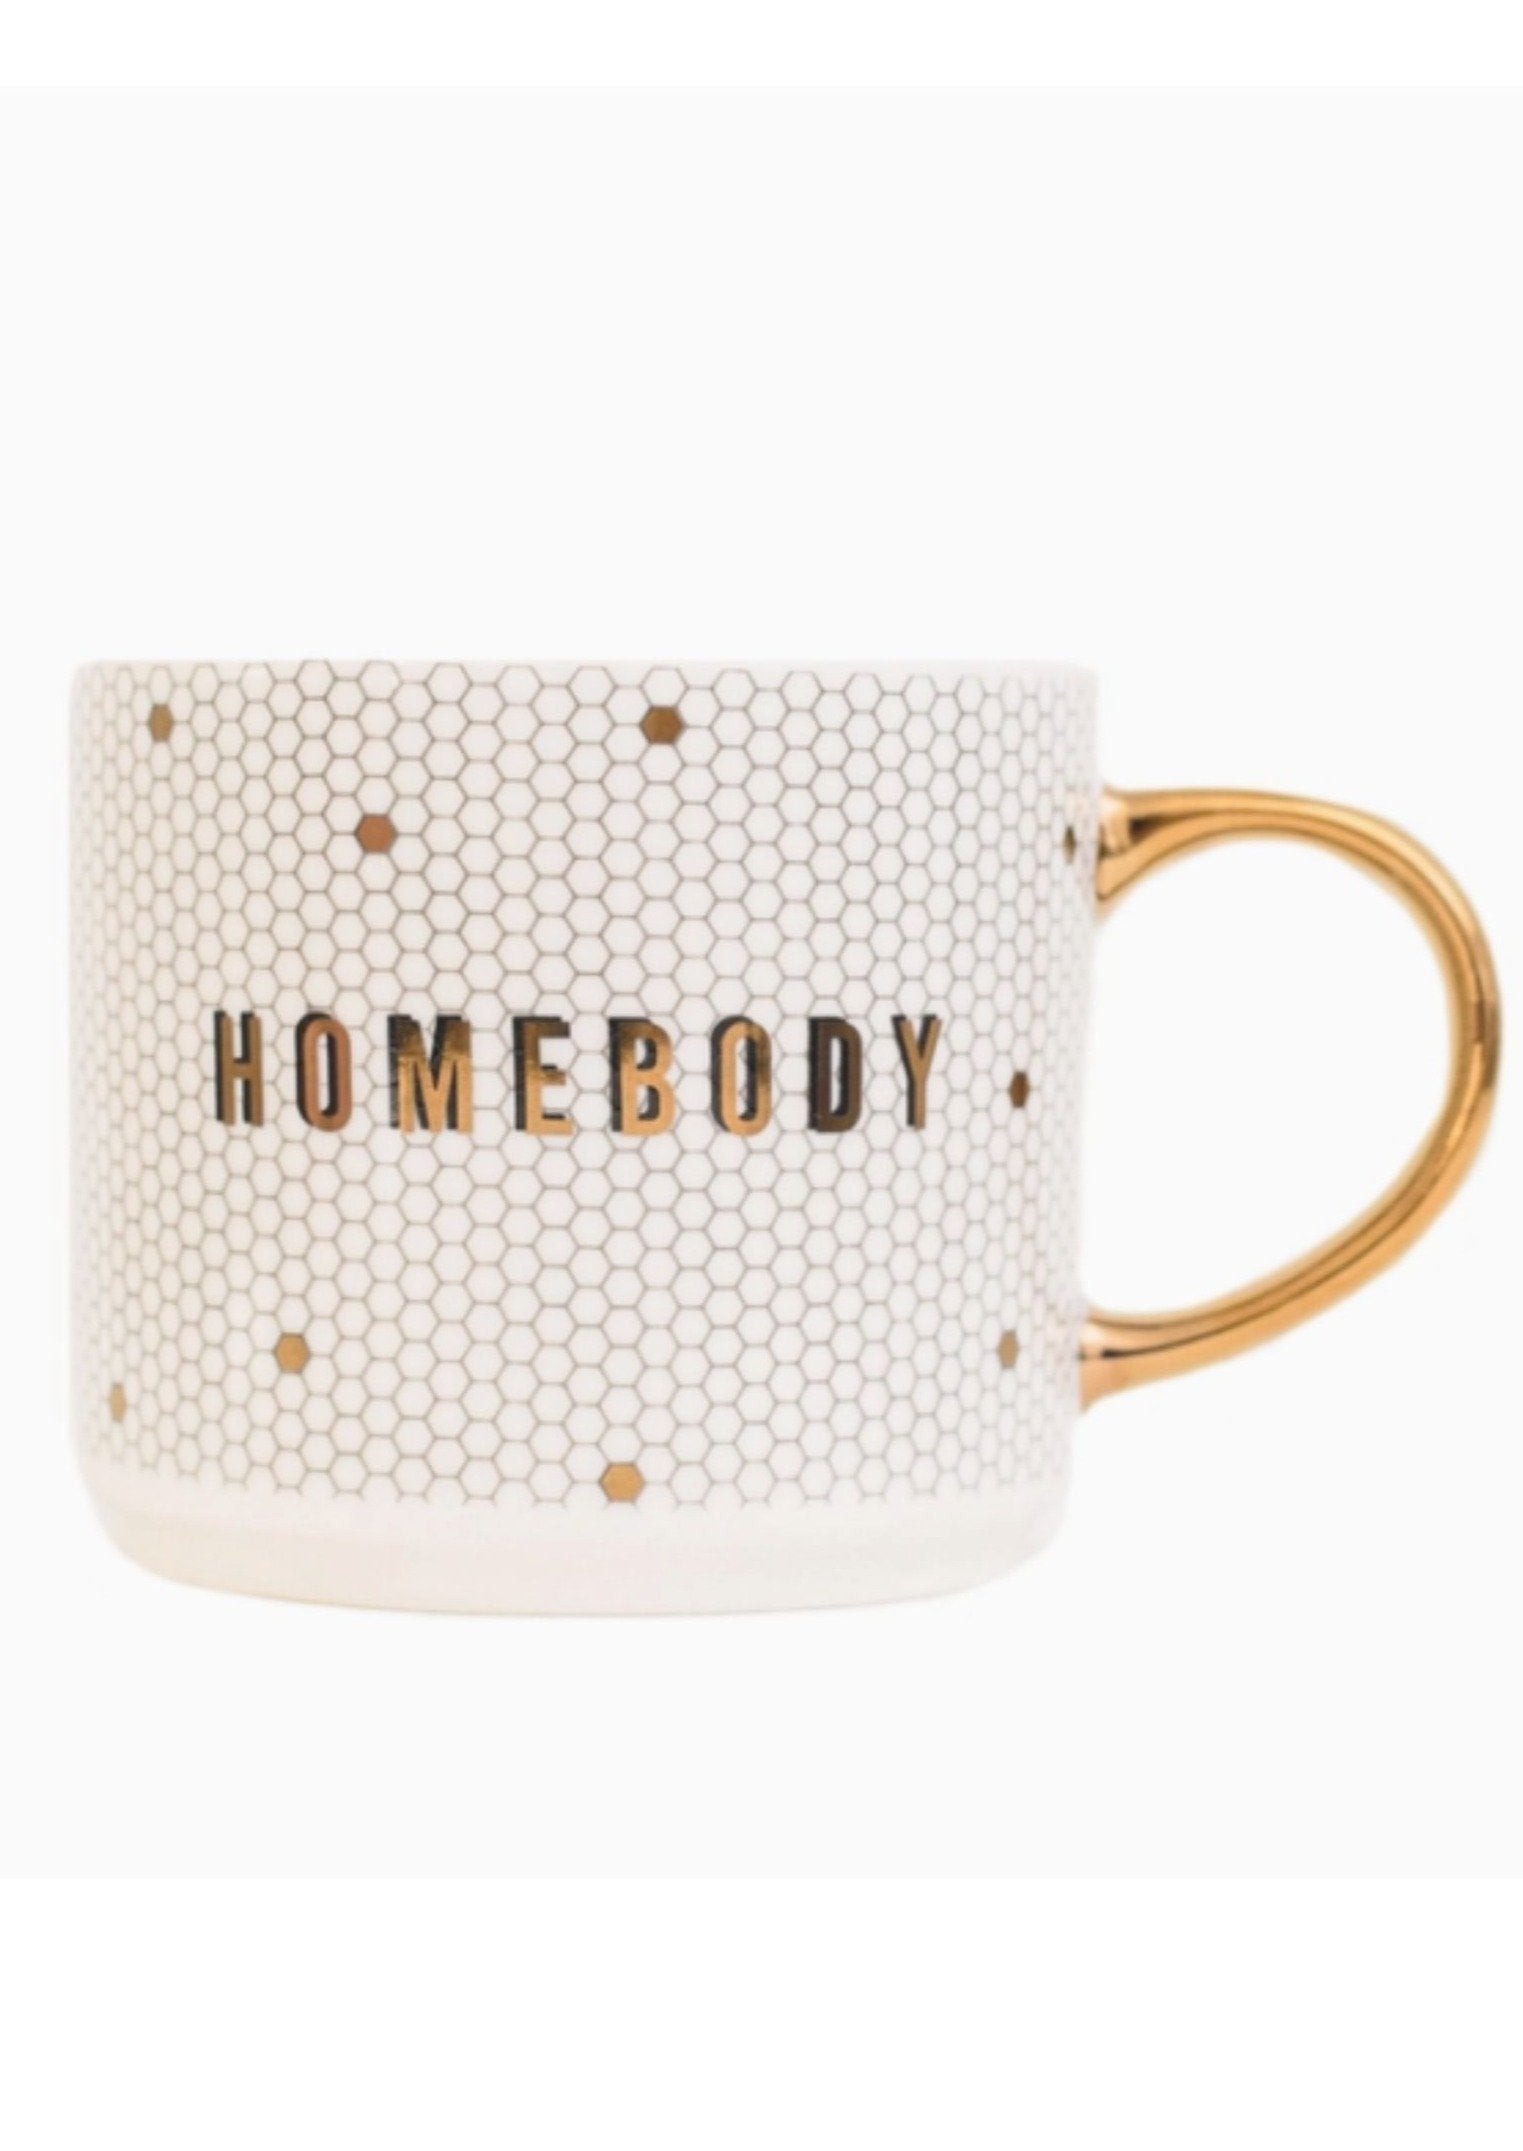 Homebody Gold Detail Coffee Mug Home & Lifestyle Sweet Water Decor